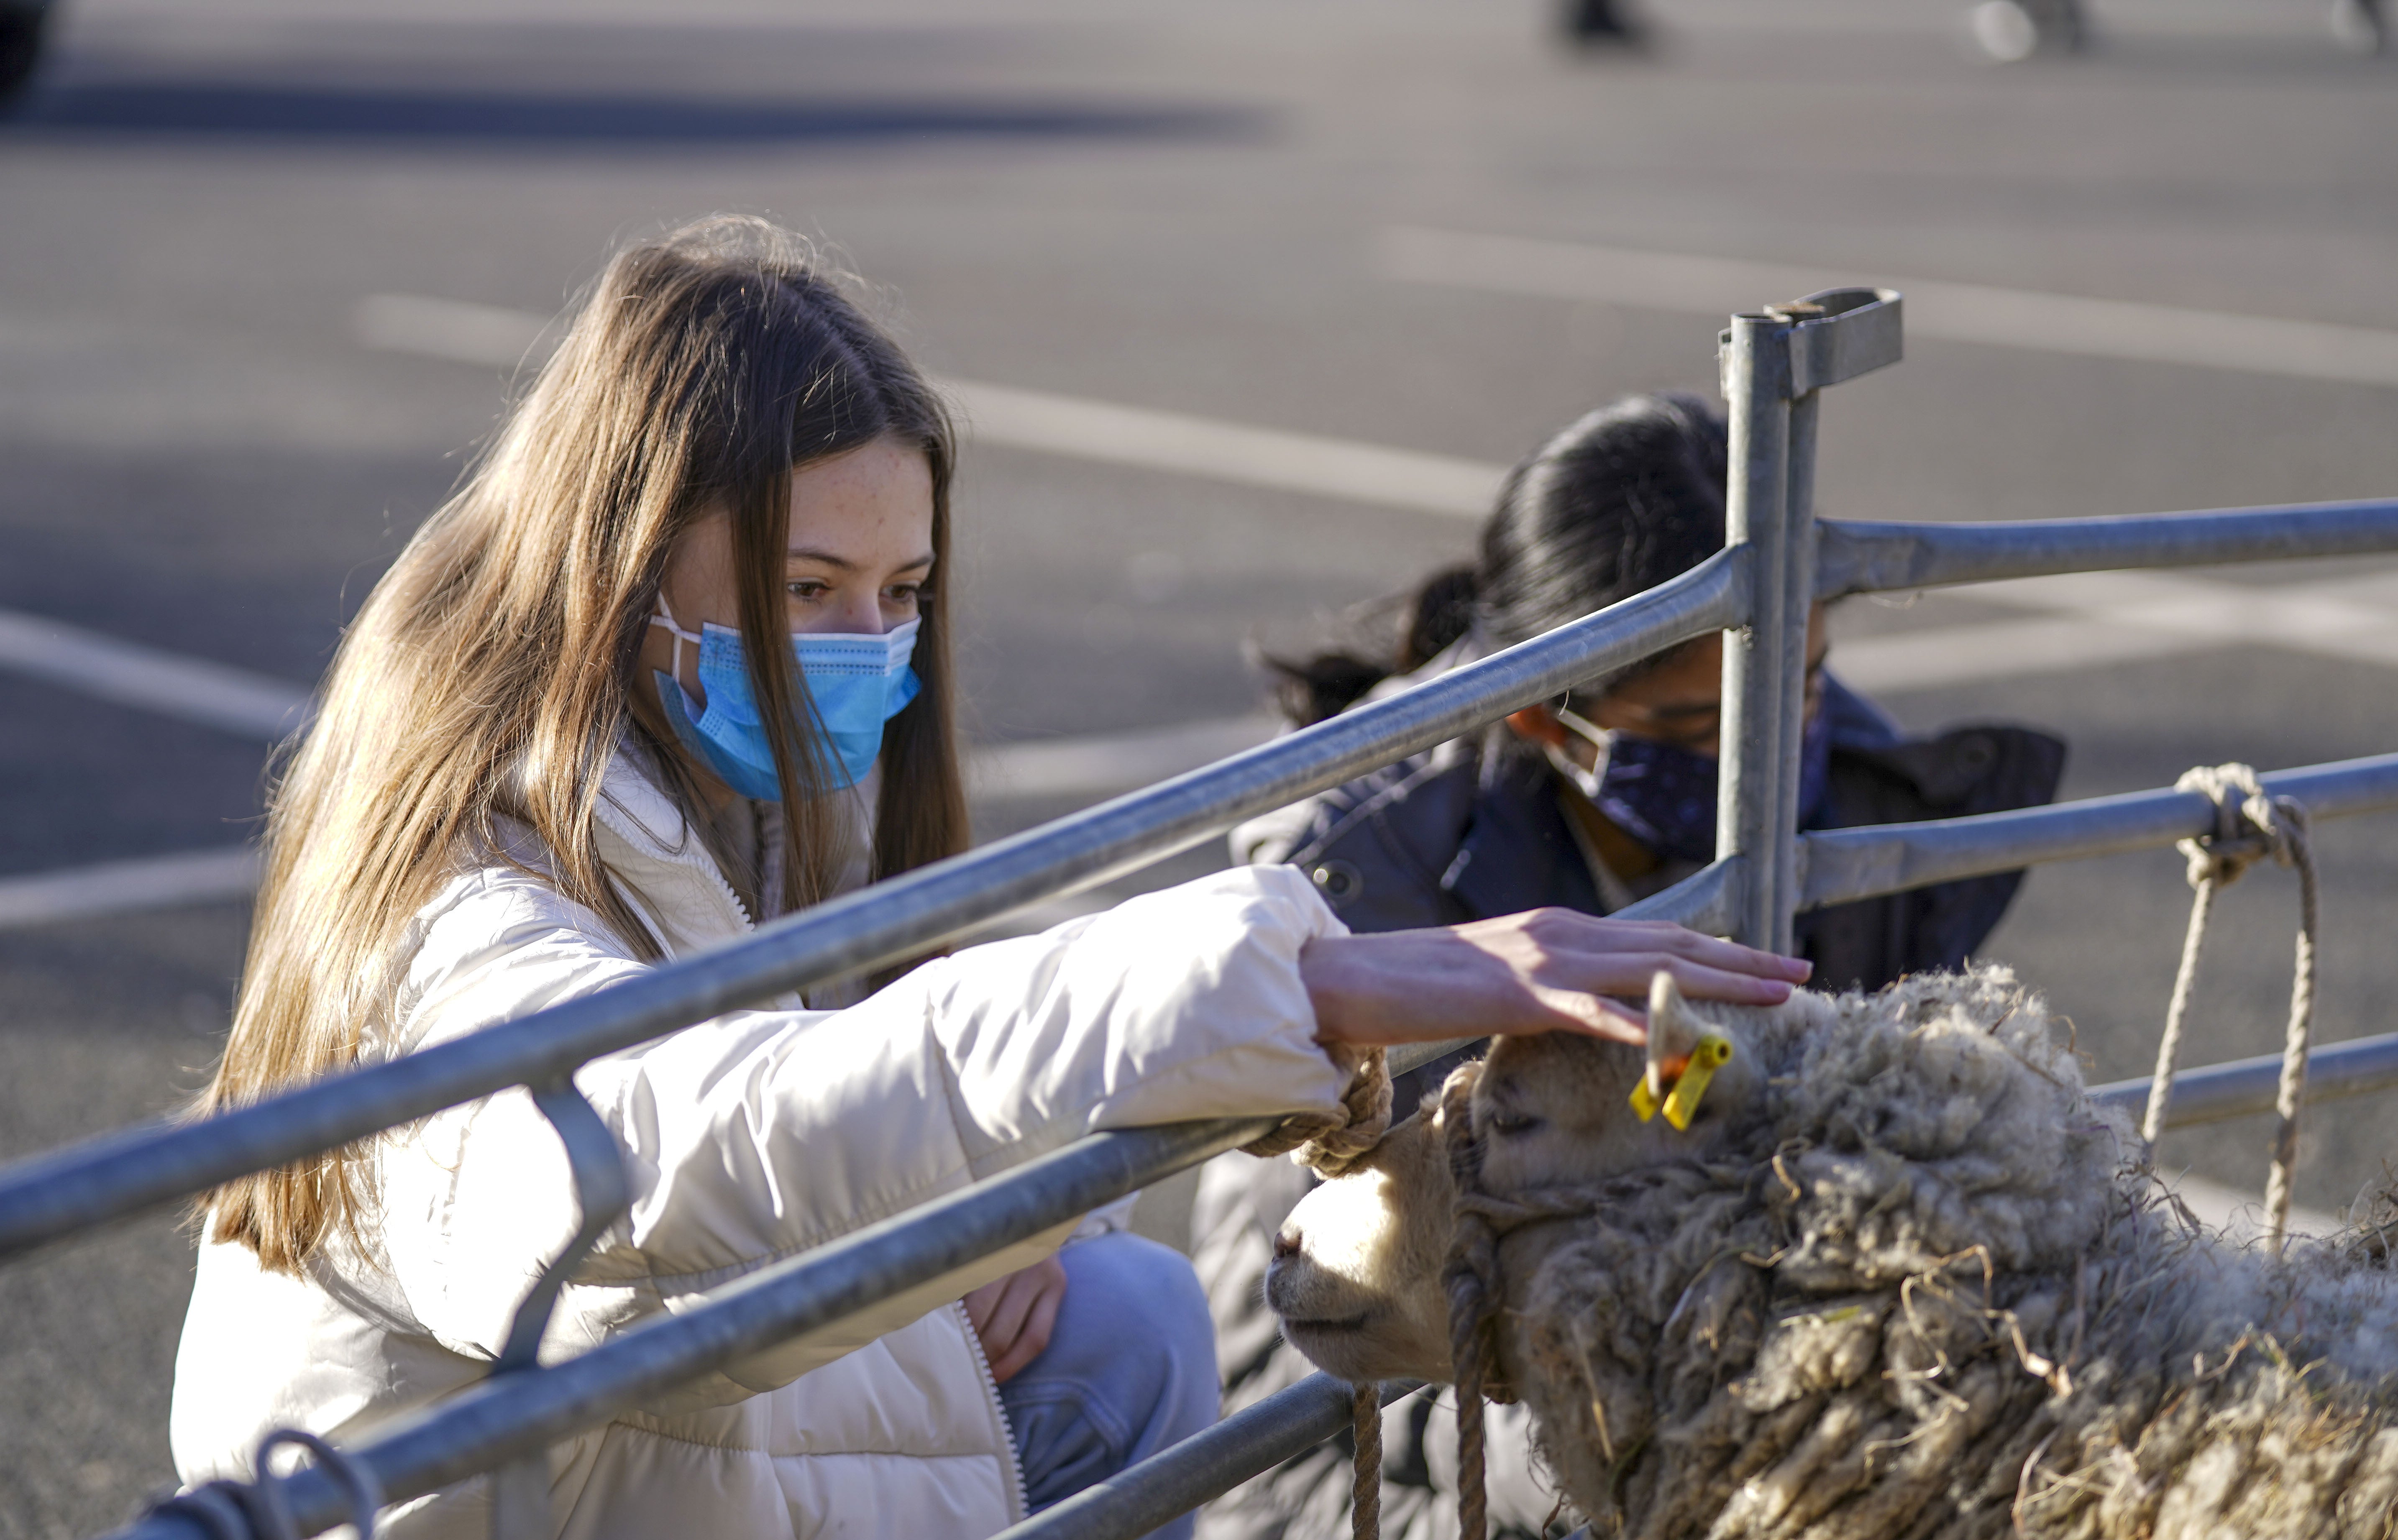 Veronika and Sama stroke a sheep (Steve Parsons/PA)